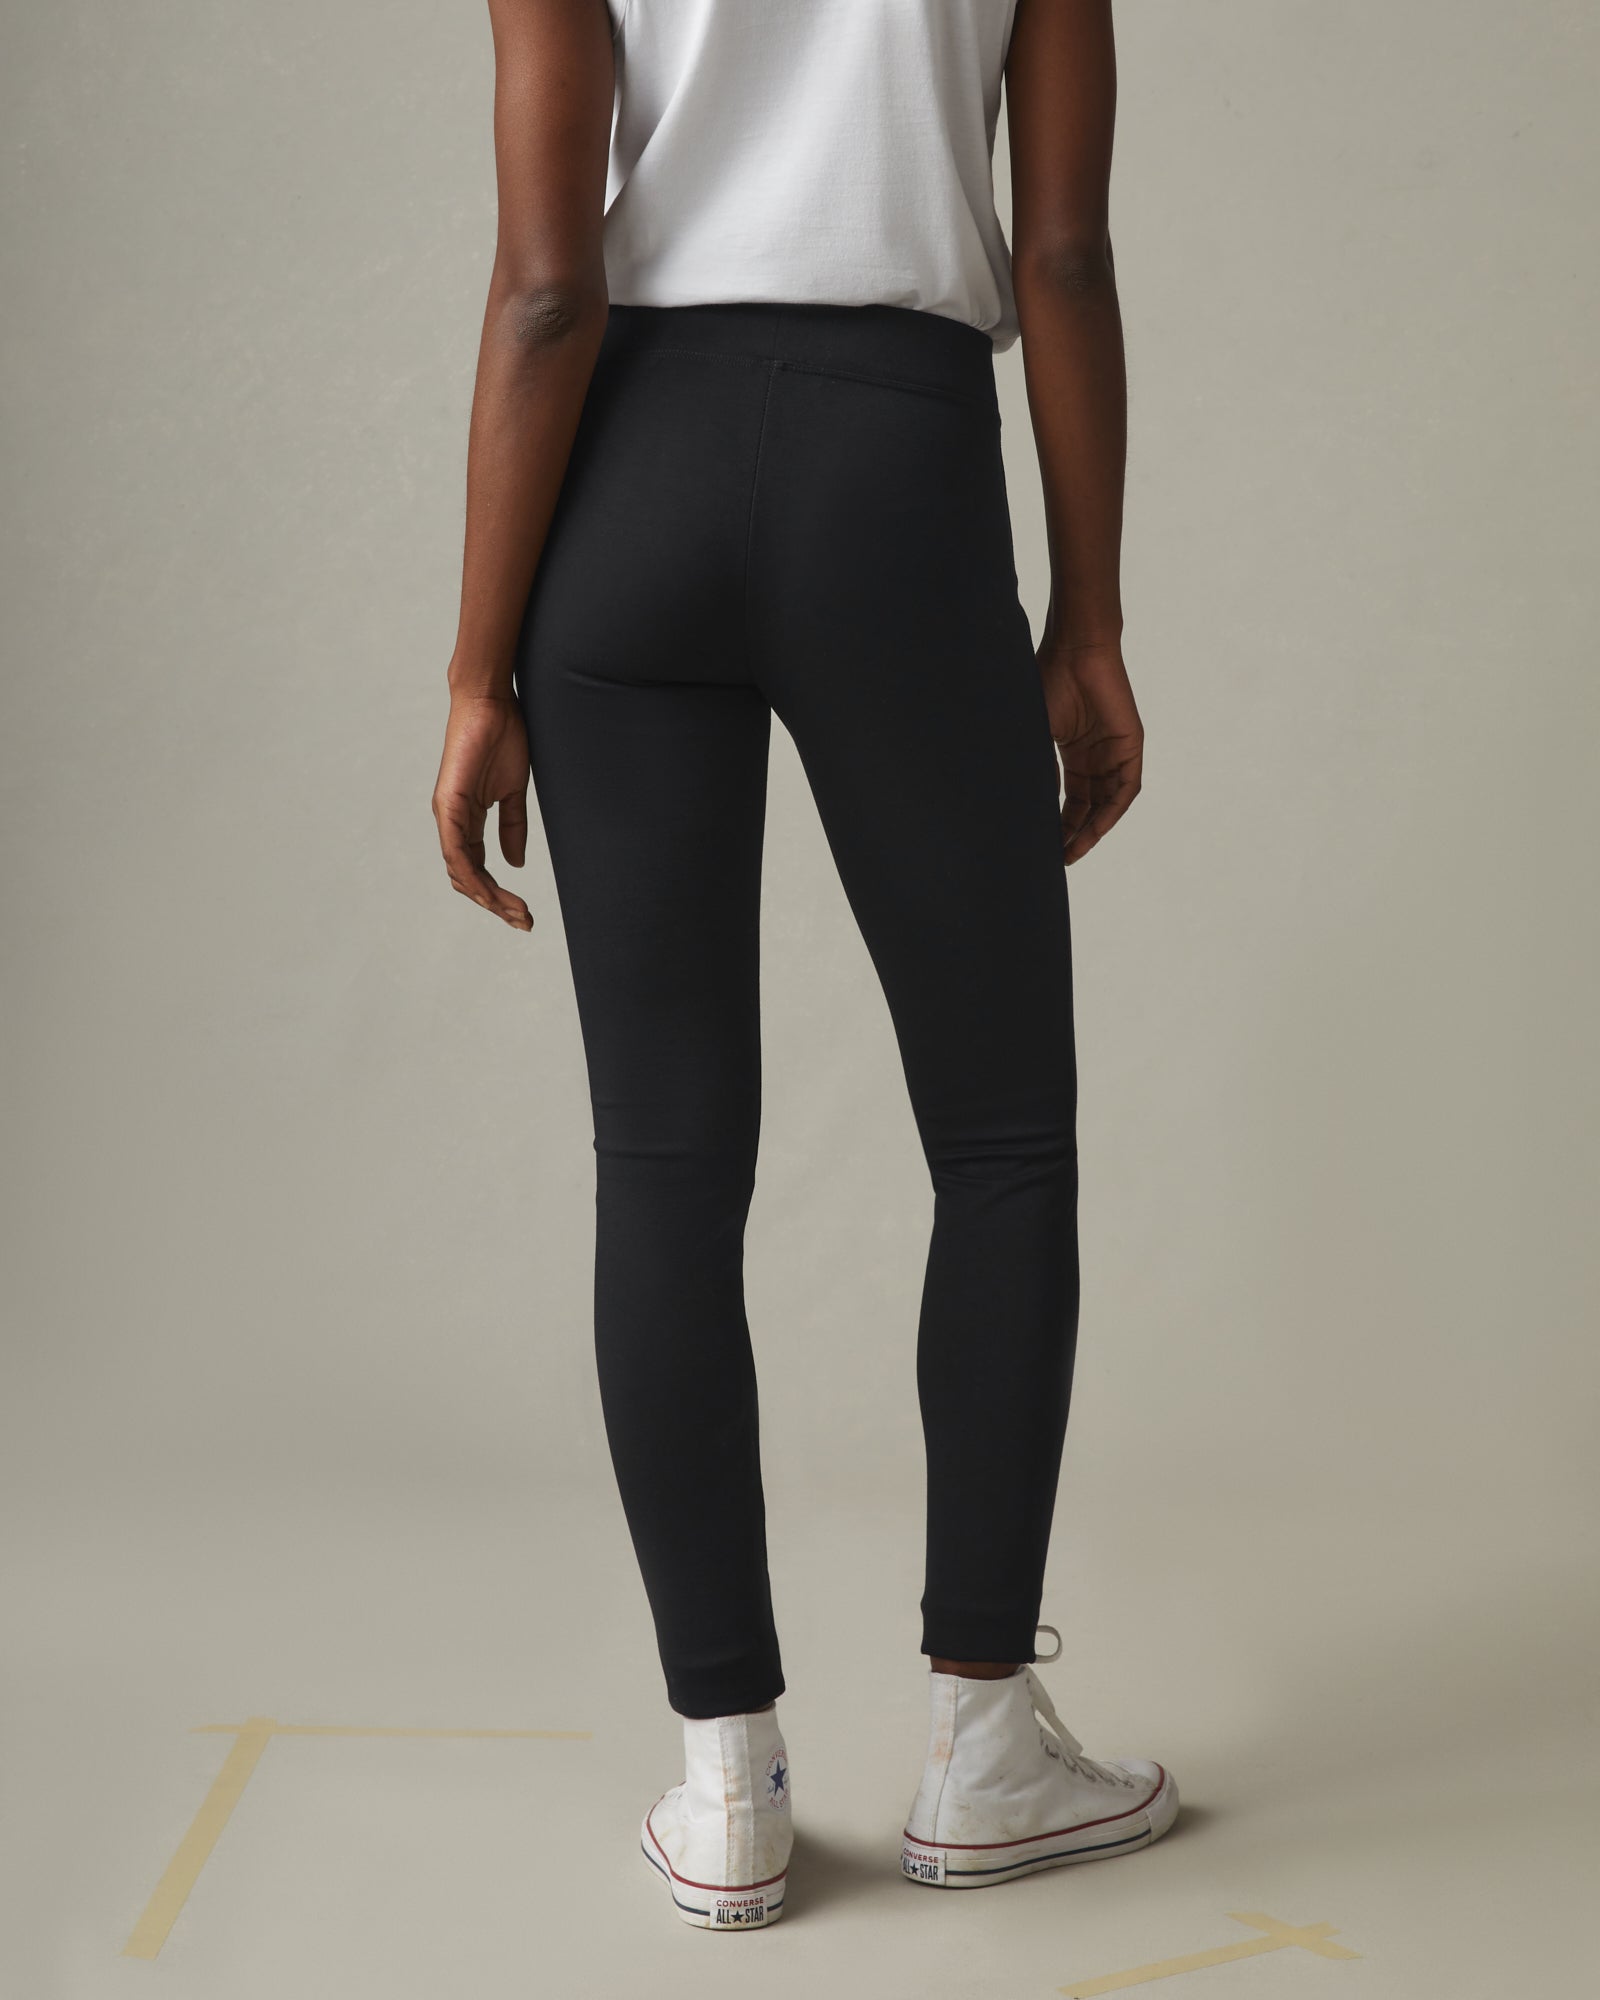 2 Back Pockets,Tall Womens Bootcut Yoga Pants Flare Workout  Pants,33,Black,Size XXL